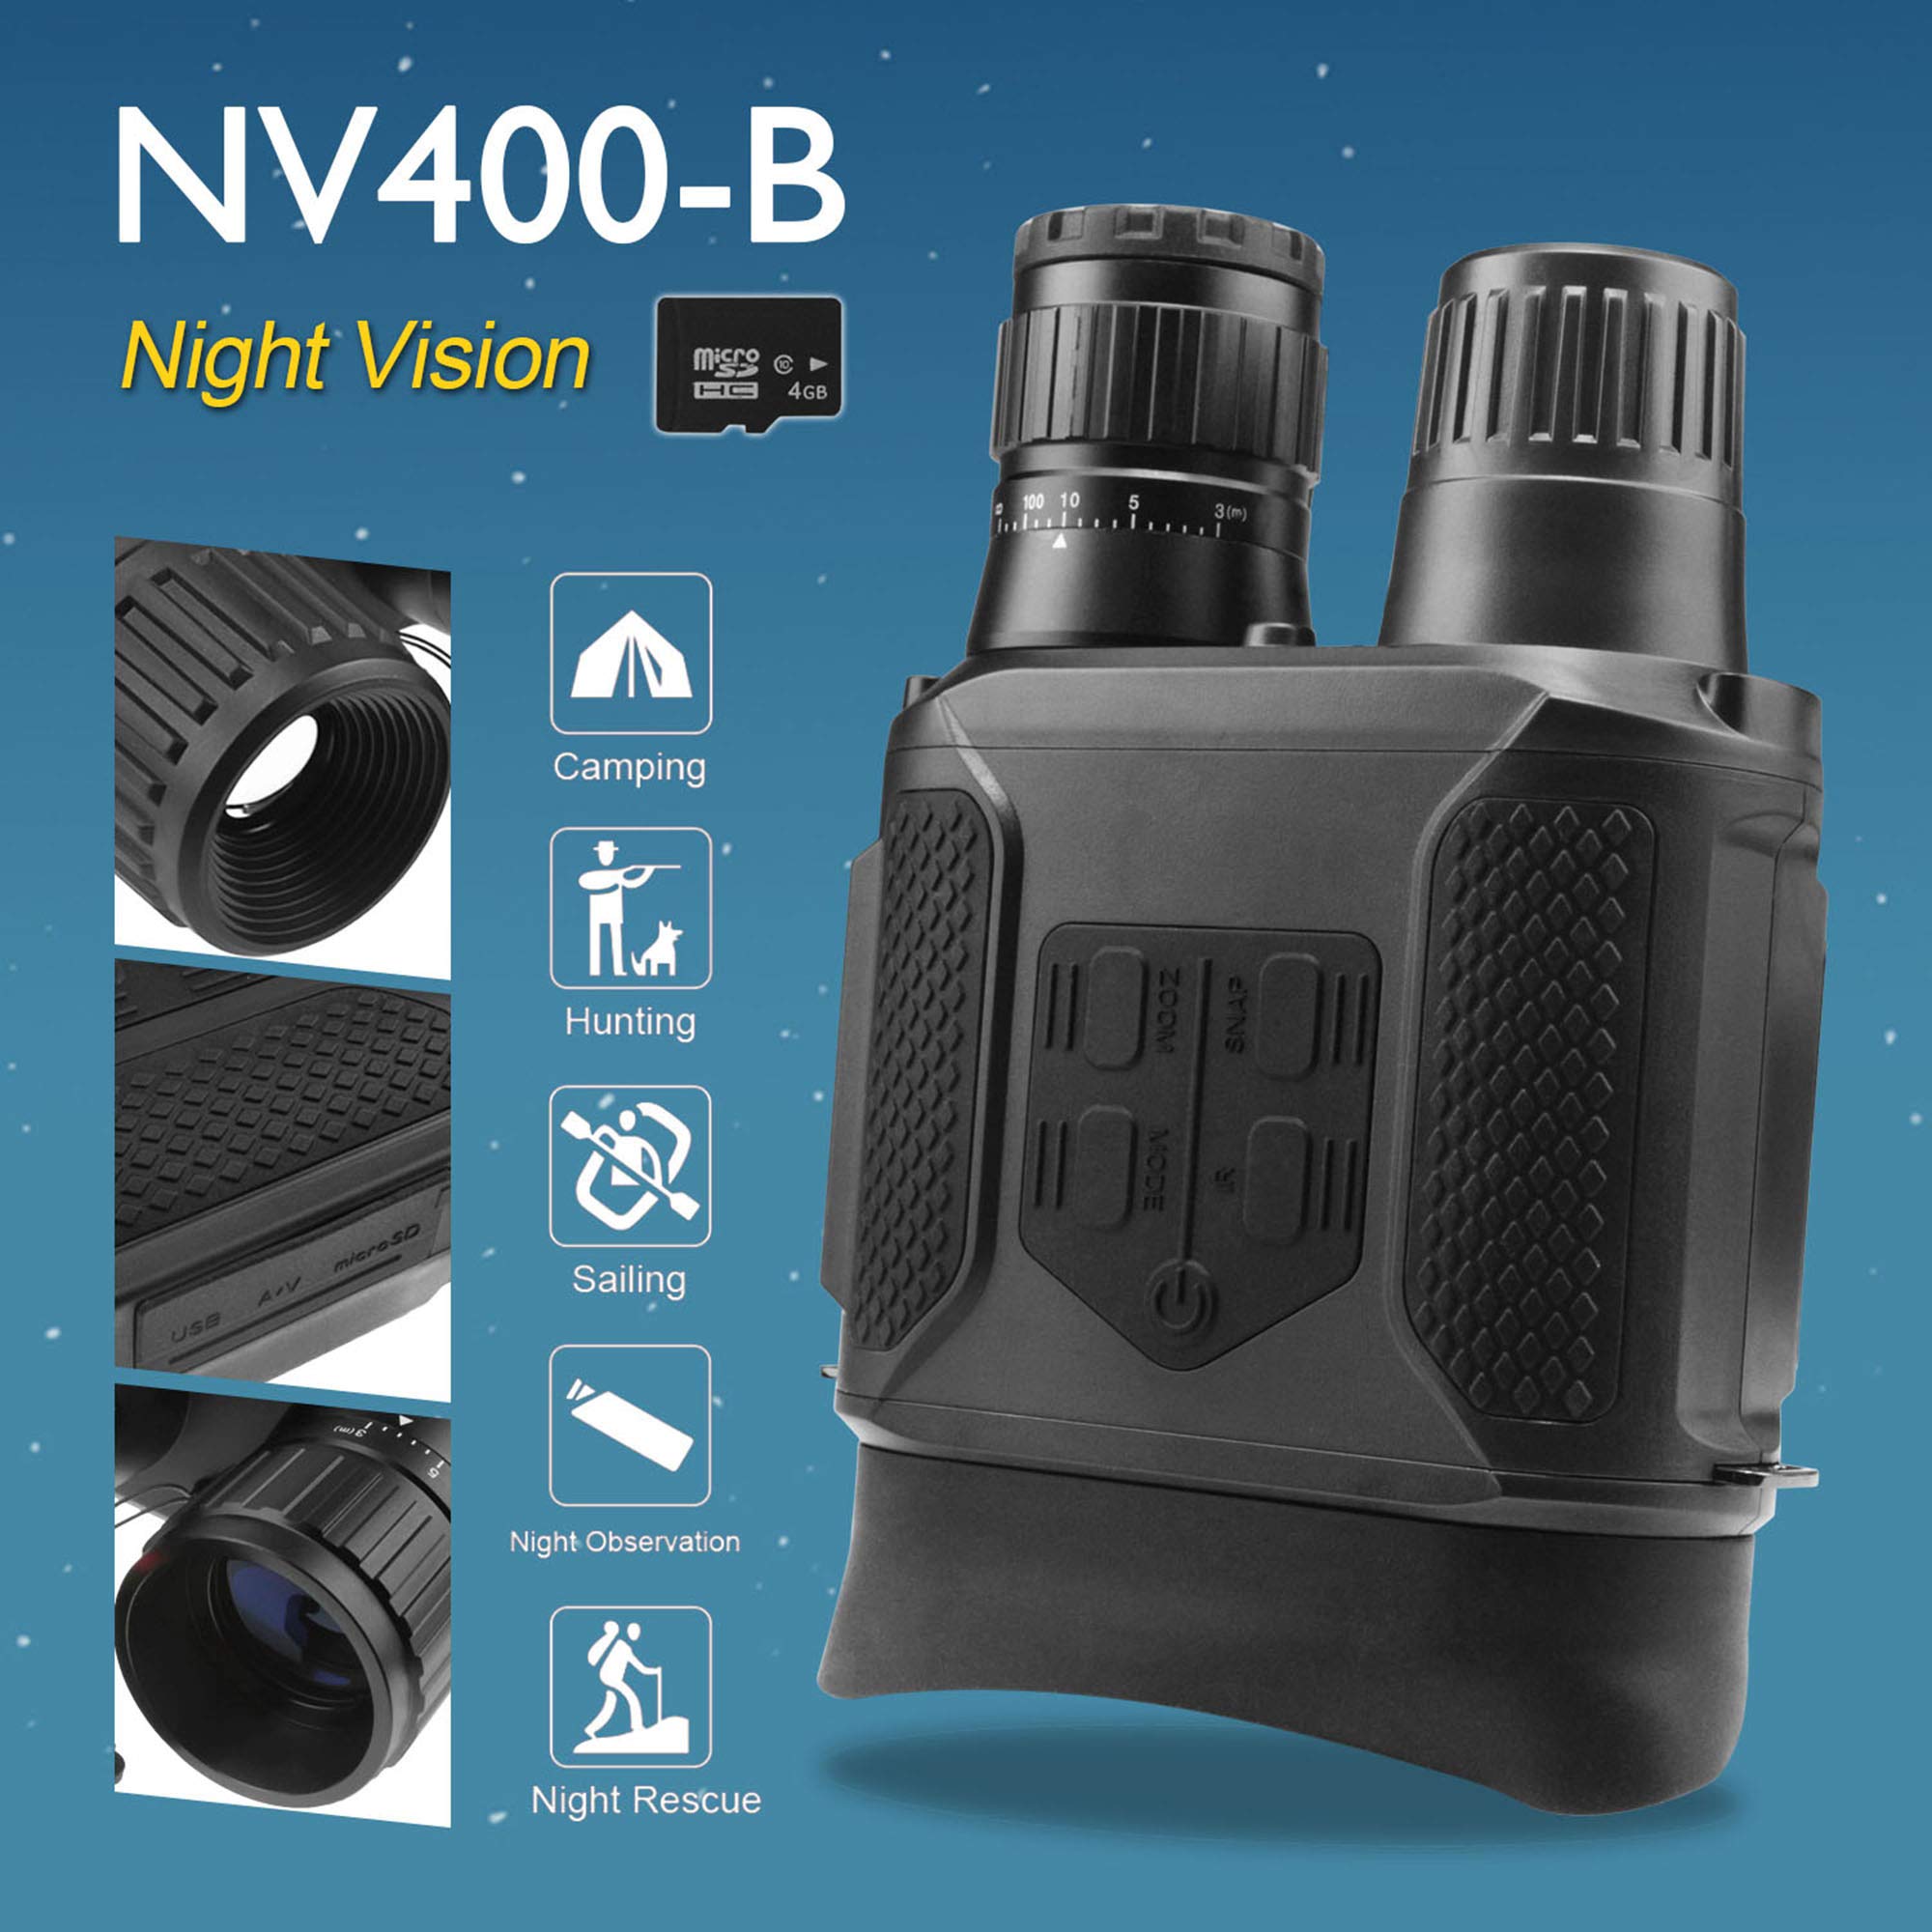 Alstar Night Vision Binocular/Digital Infrared Night Vision Scope - 7x31 Hunting IR Telescope with 2